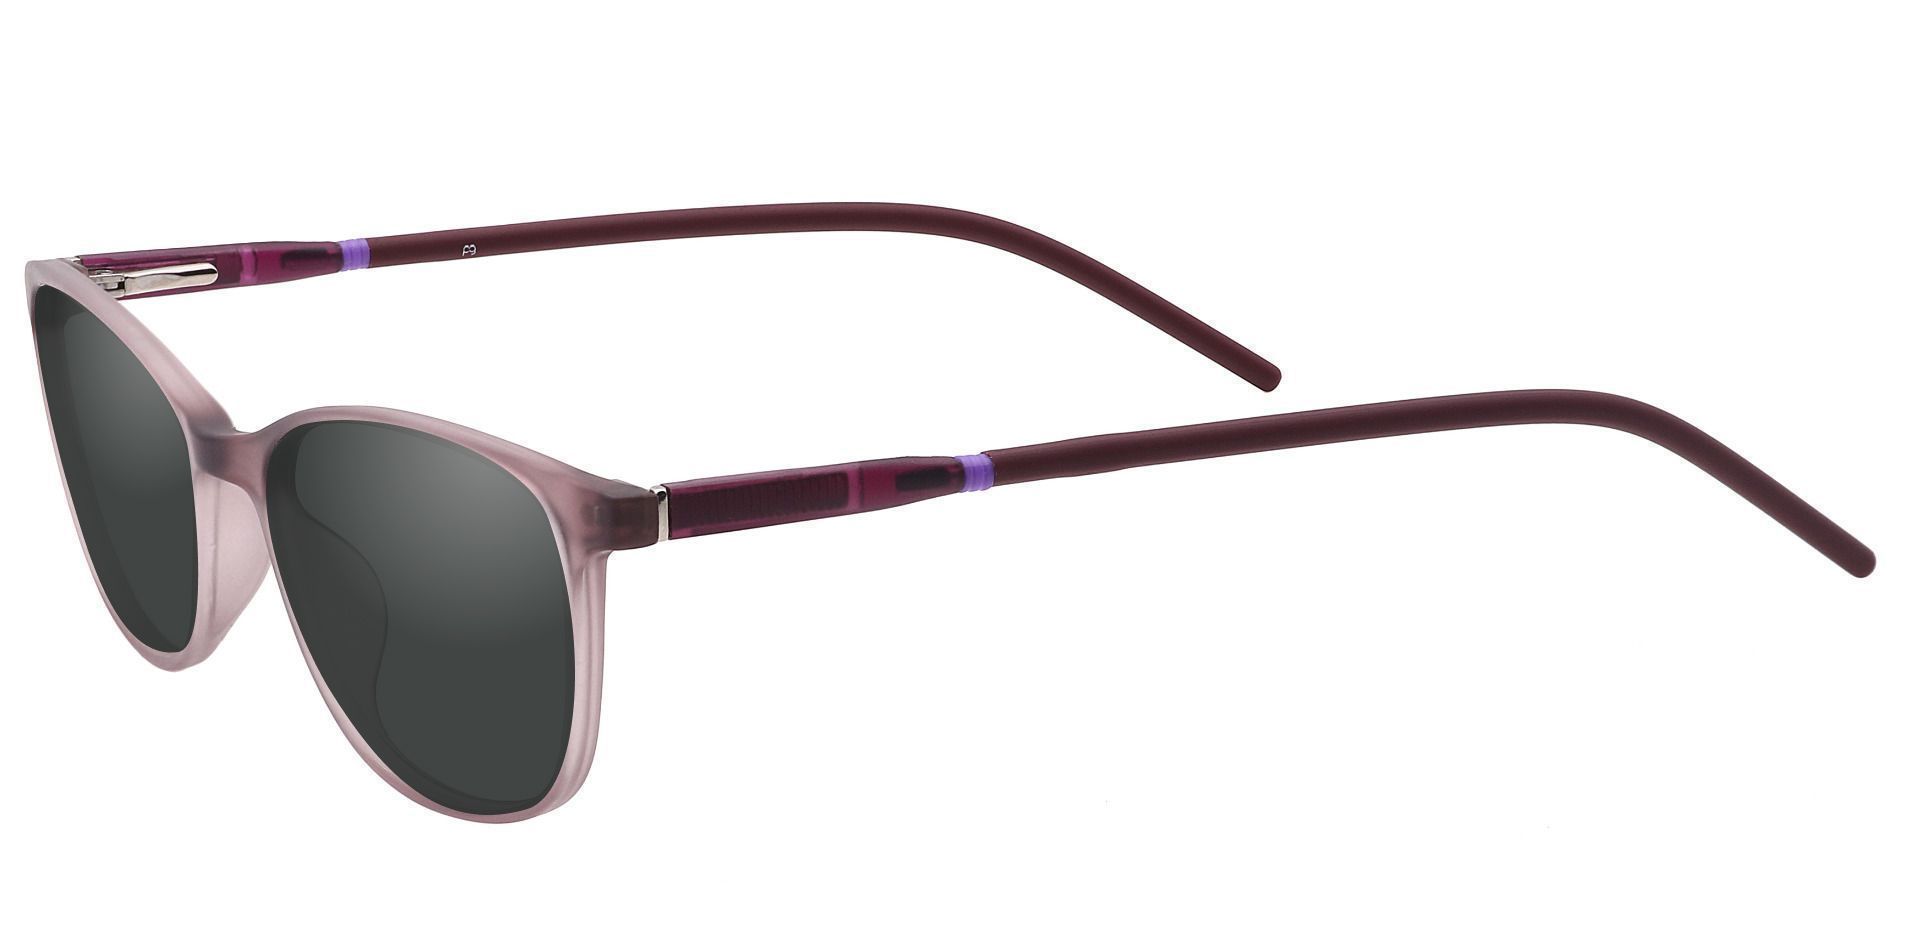 Hazel Square Reading Sunglasses - Purple Frame With Gray Lenses